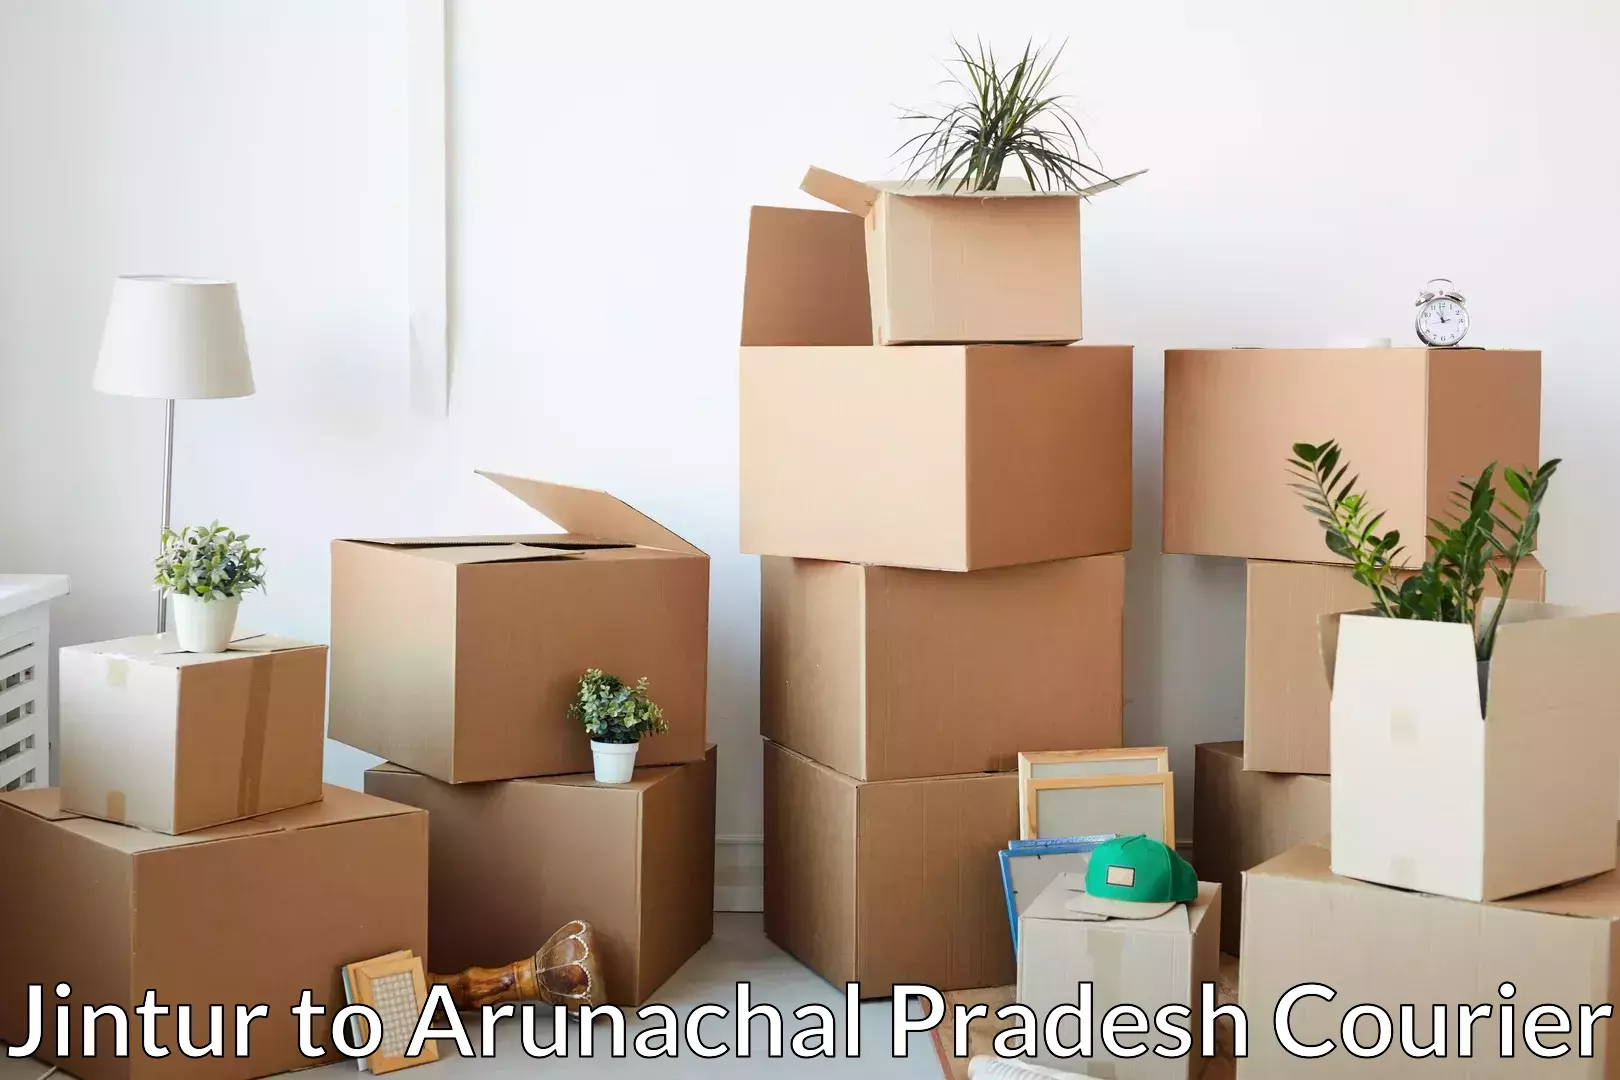 Professional moving company Jintur to Arunachal Pradesh